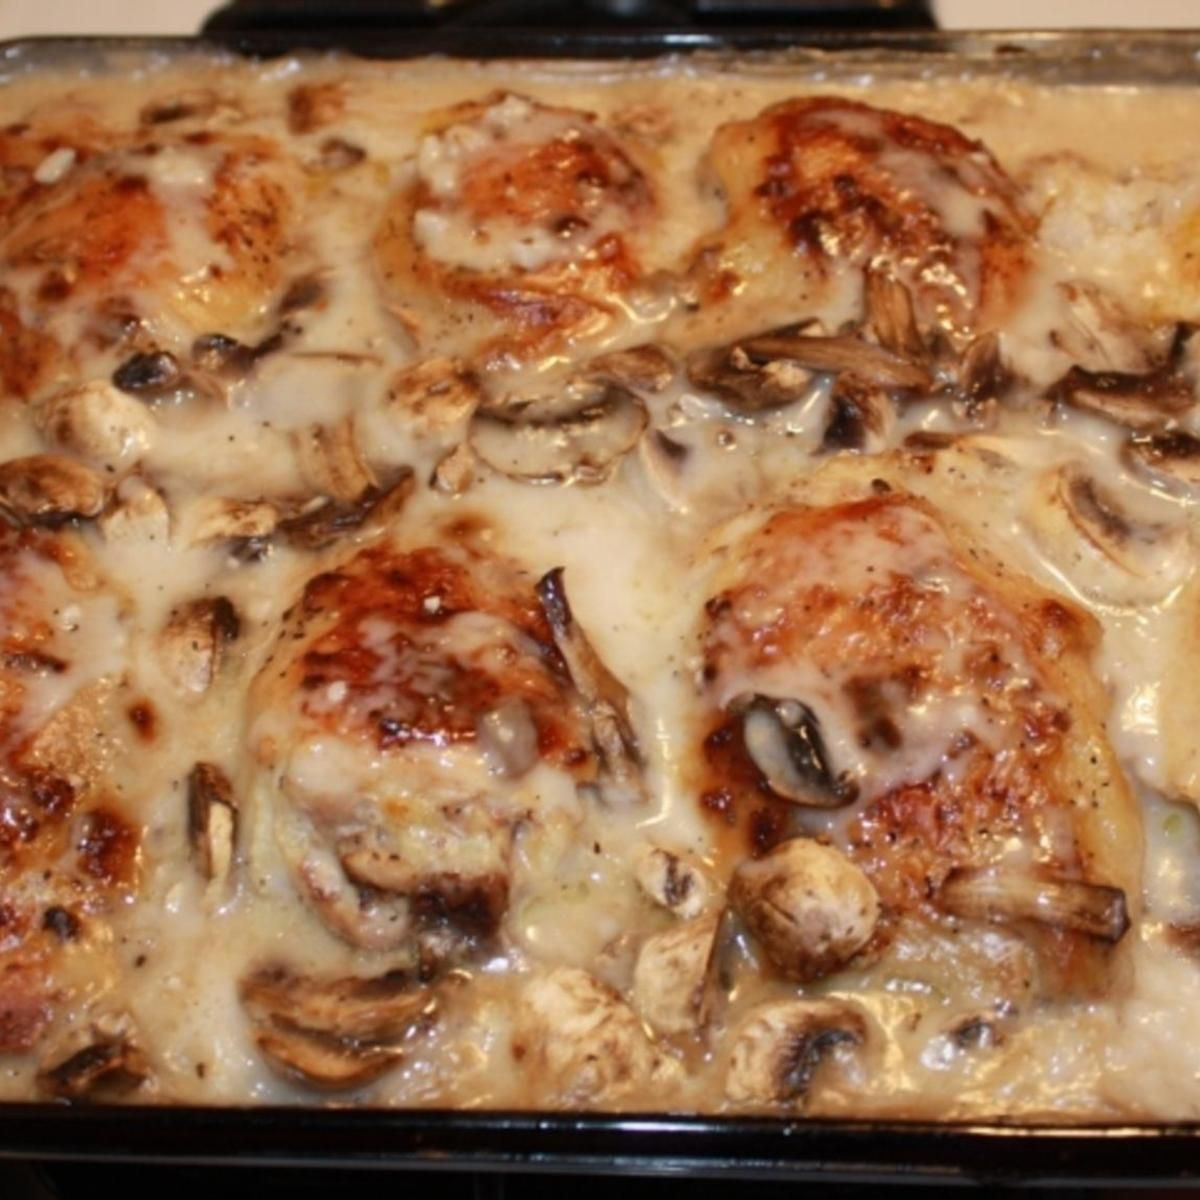 Baked Chicken Recipe With Cream Of Mushroom Soup
 The 25 best Cream of mushroom chicken ideas on Pinterest